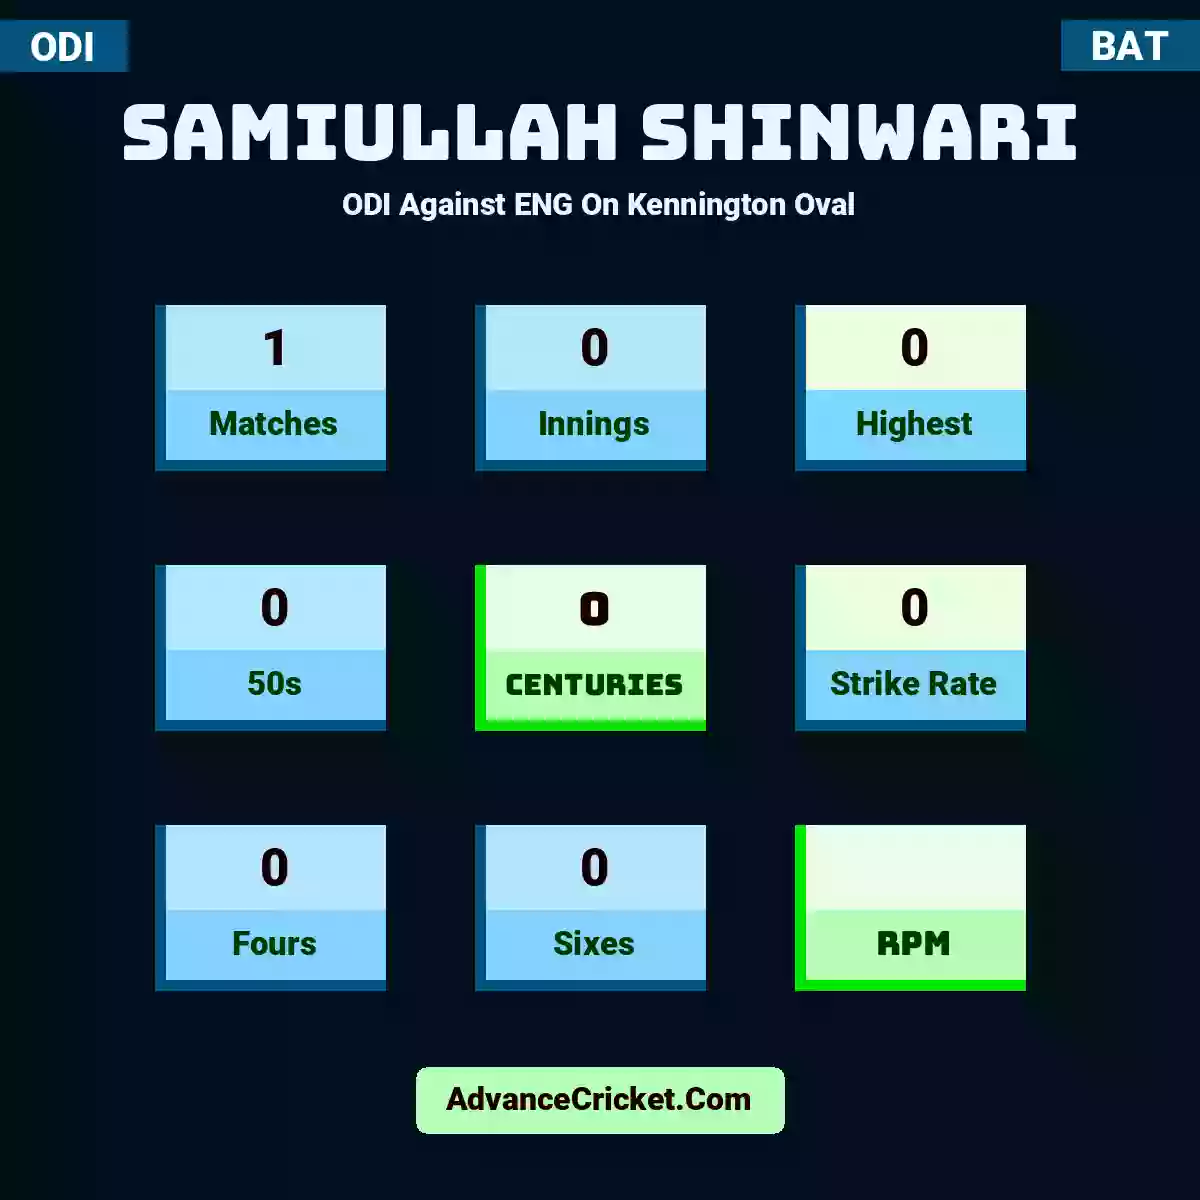 Samiullah Shinwari ODI  Against ENG On Kennington Oval, Samiullah Shinwari played 1 matches, scored 0 runs as highest, 0 half-centuries, and 0 centuries, with a strike rate of 0. S.Shinwari hit 0 fours and 0 sixes.